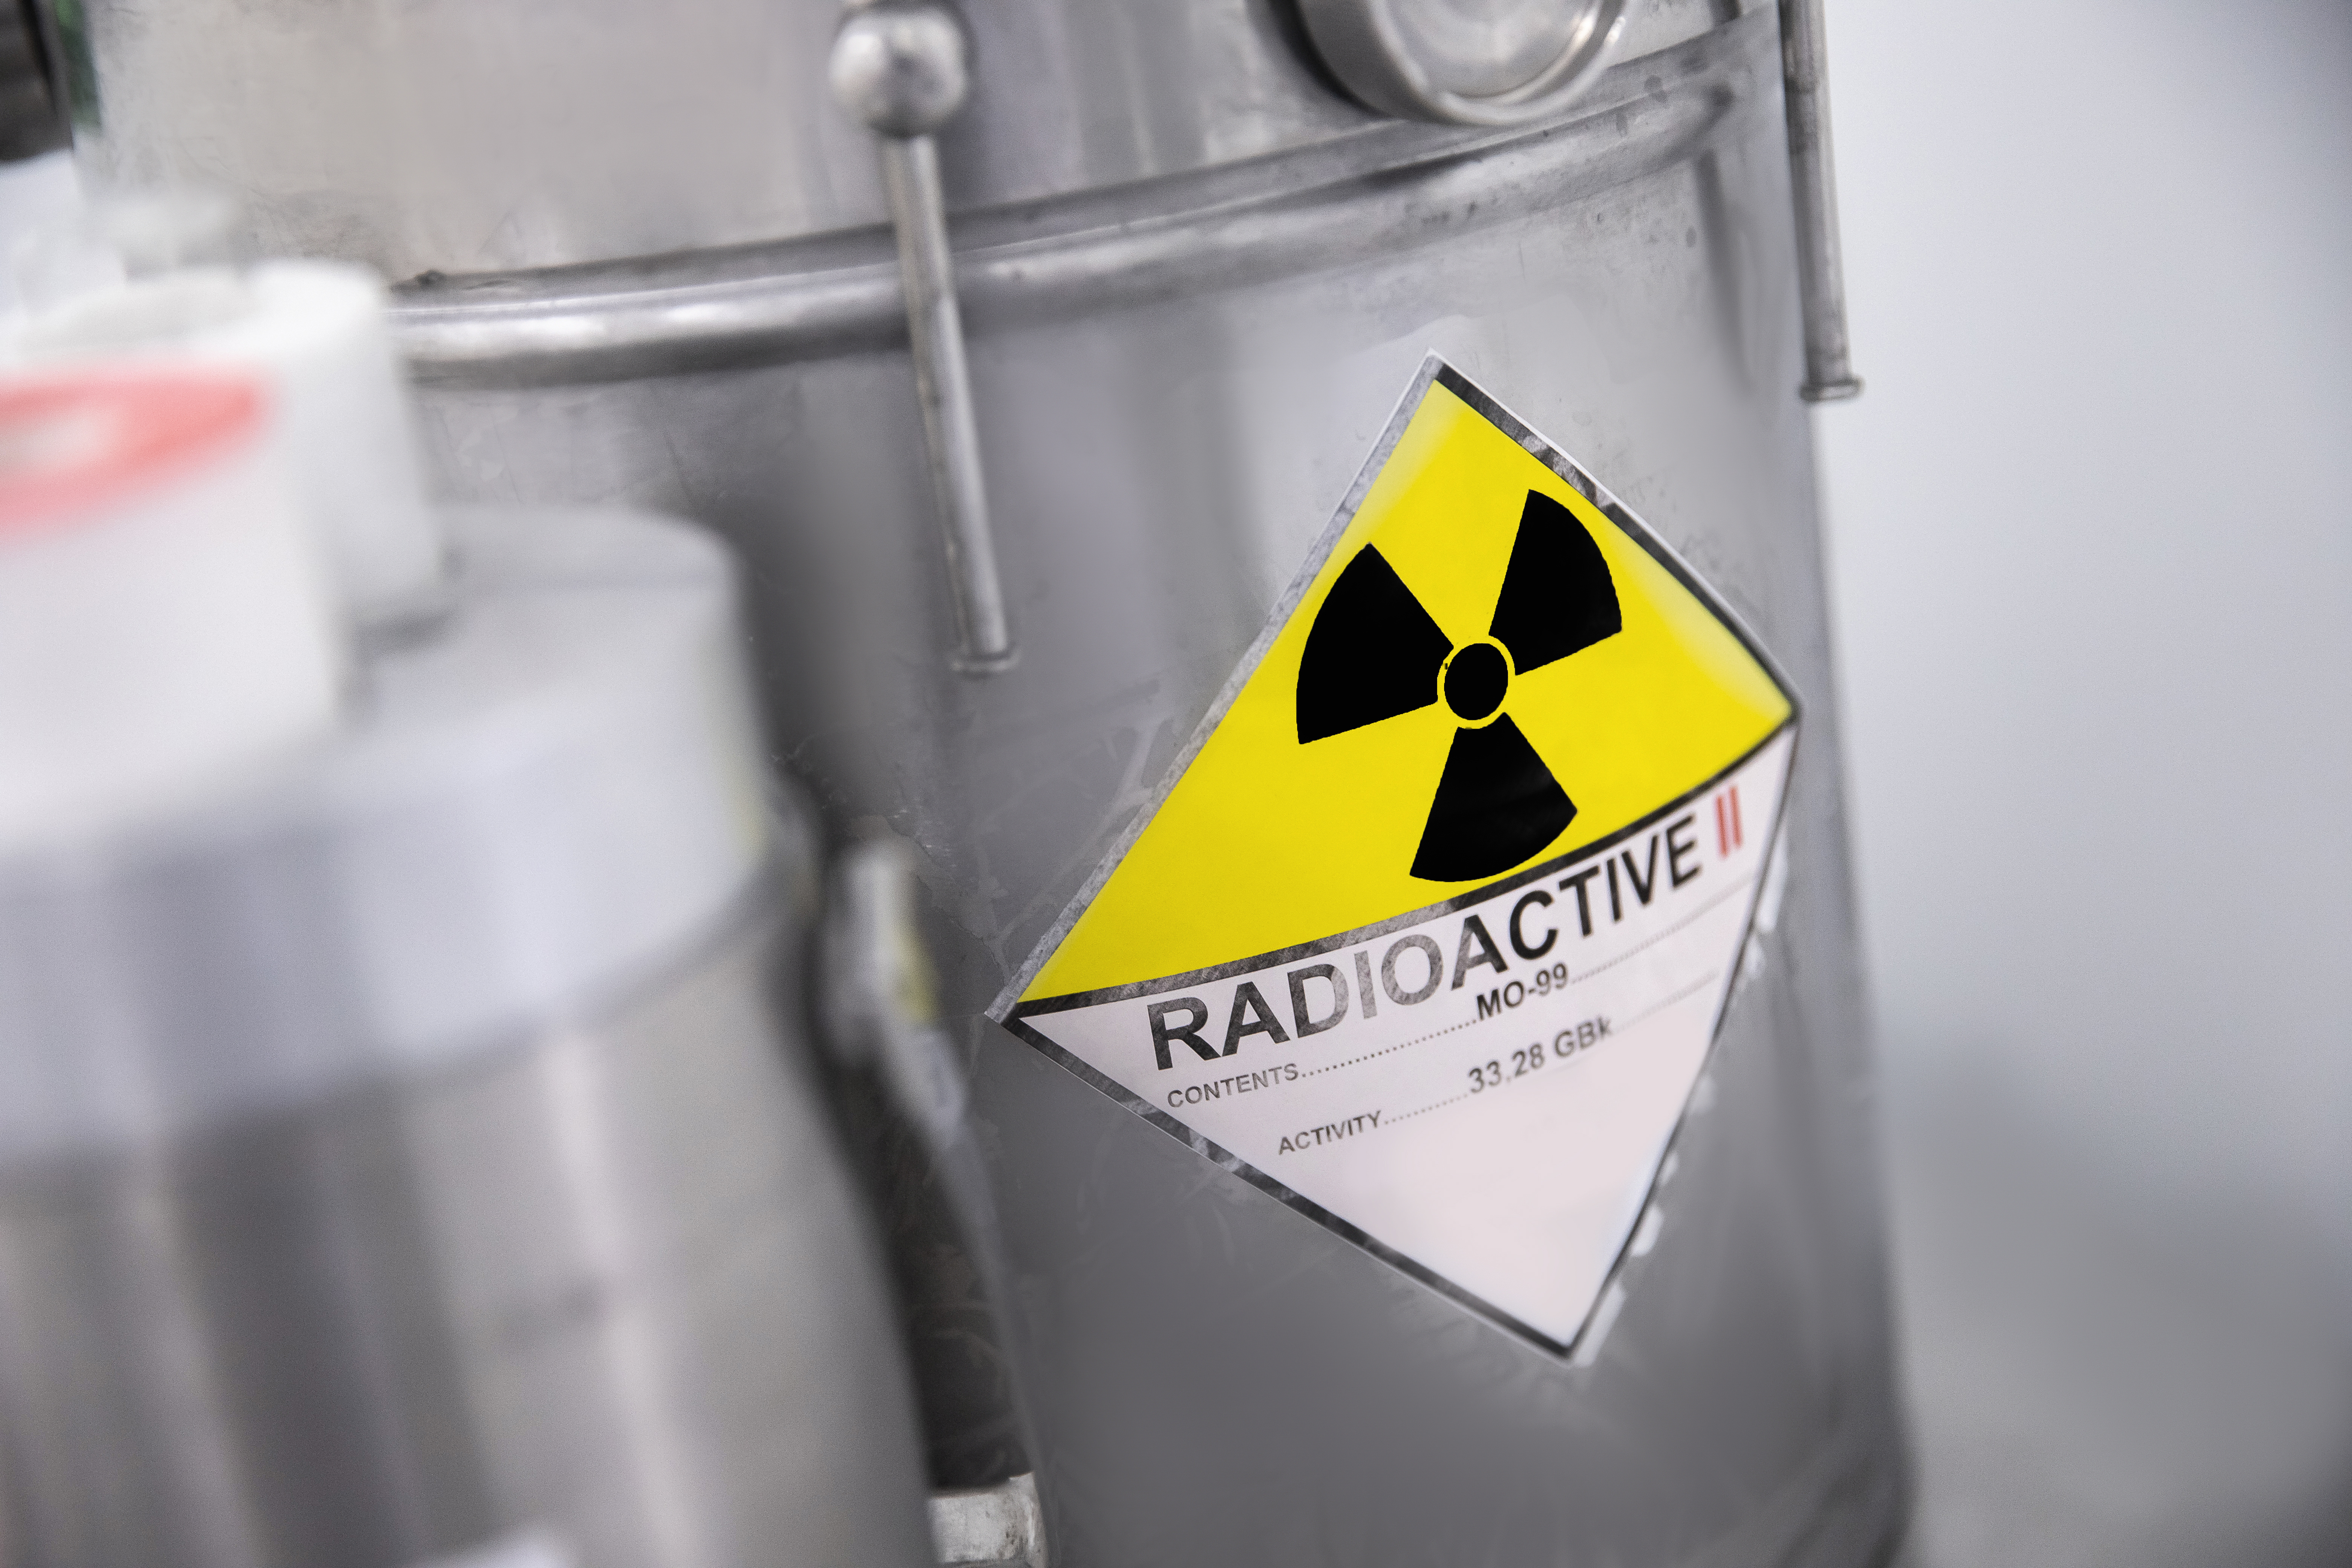 Example of a radioactive materials marking